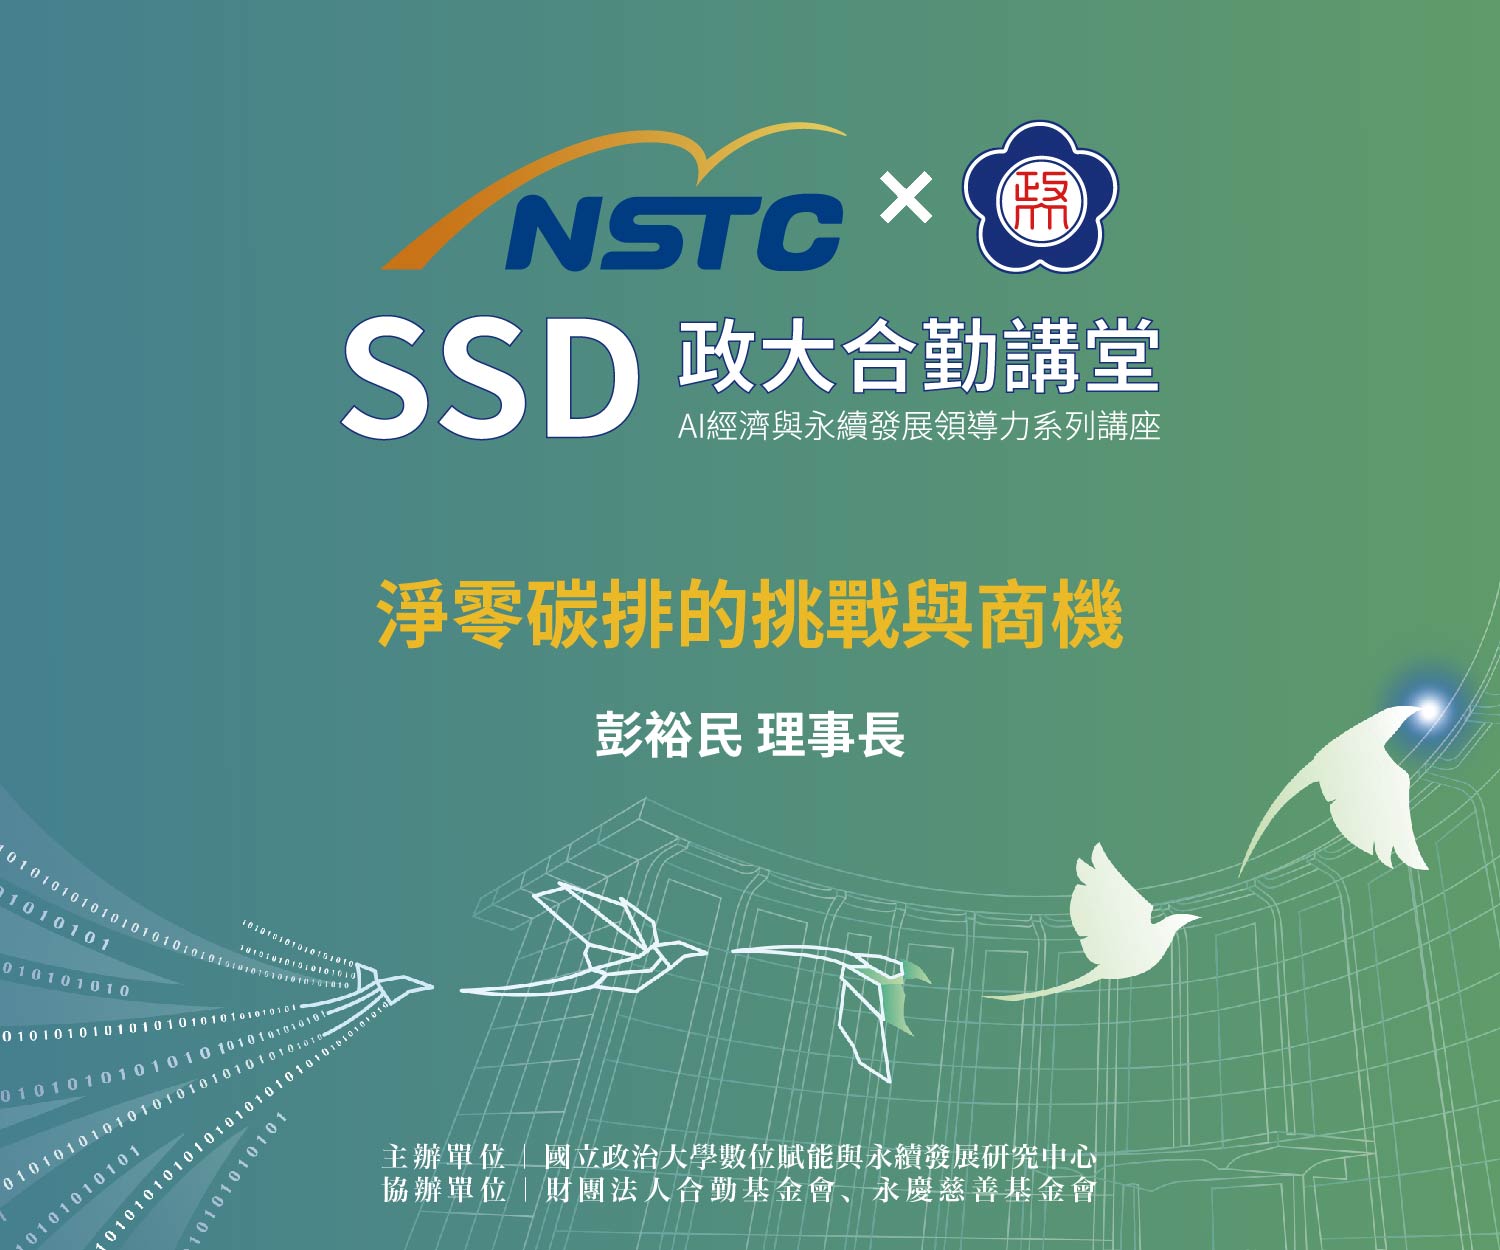 SSD政大合勤講堂｜AI經濟與永續發展領導力系列講座EP04 開放報名中！